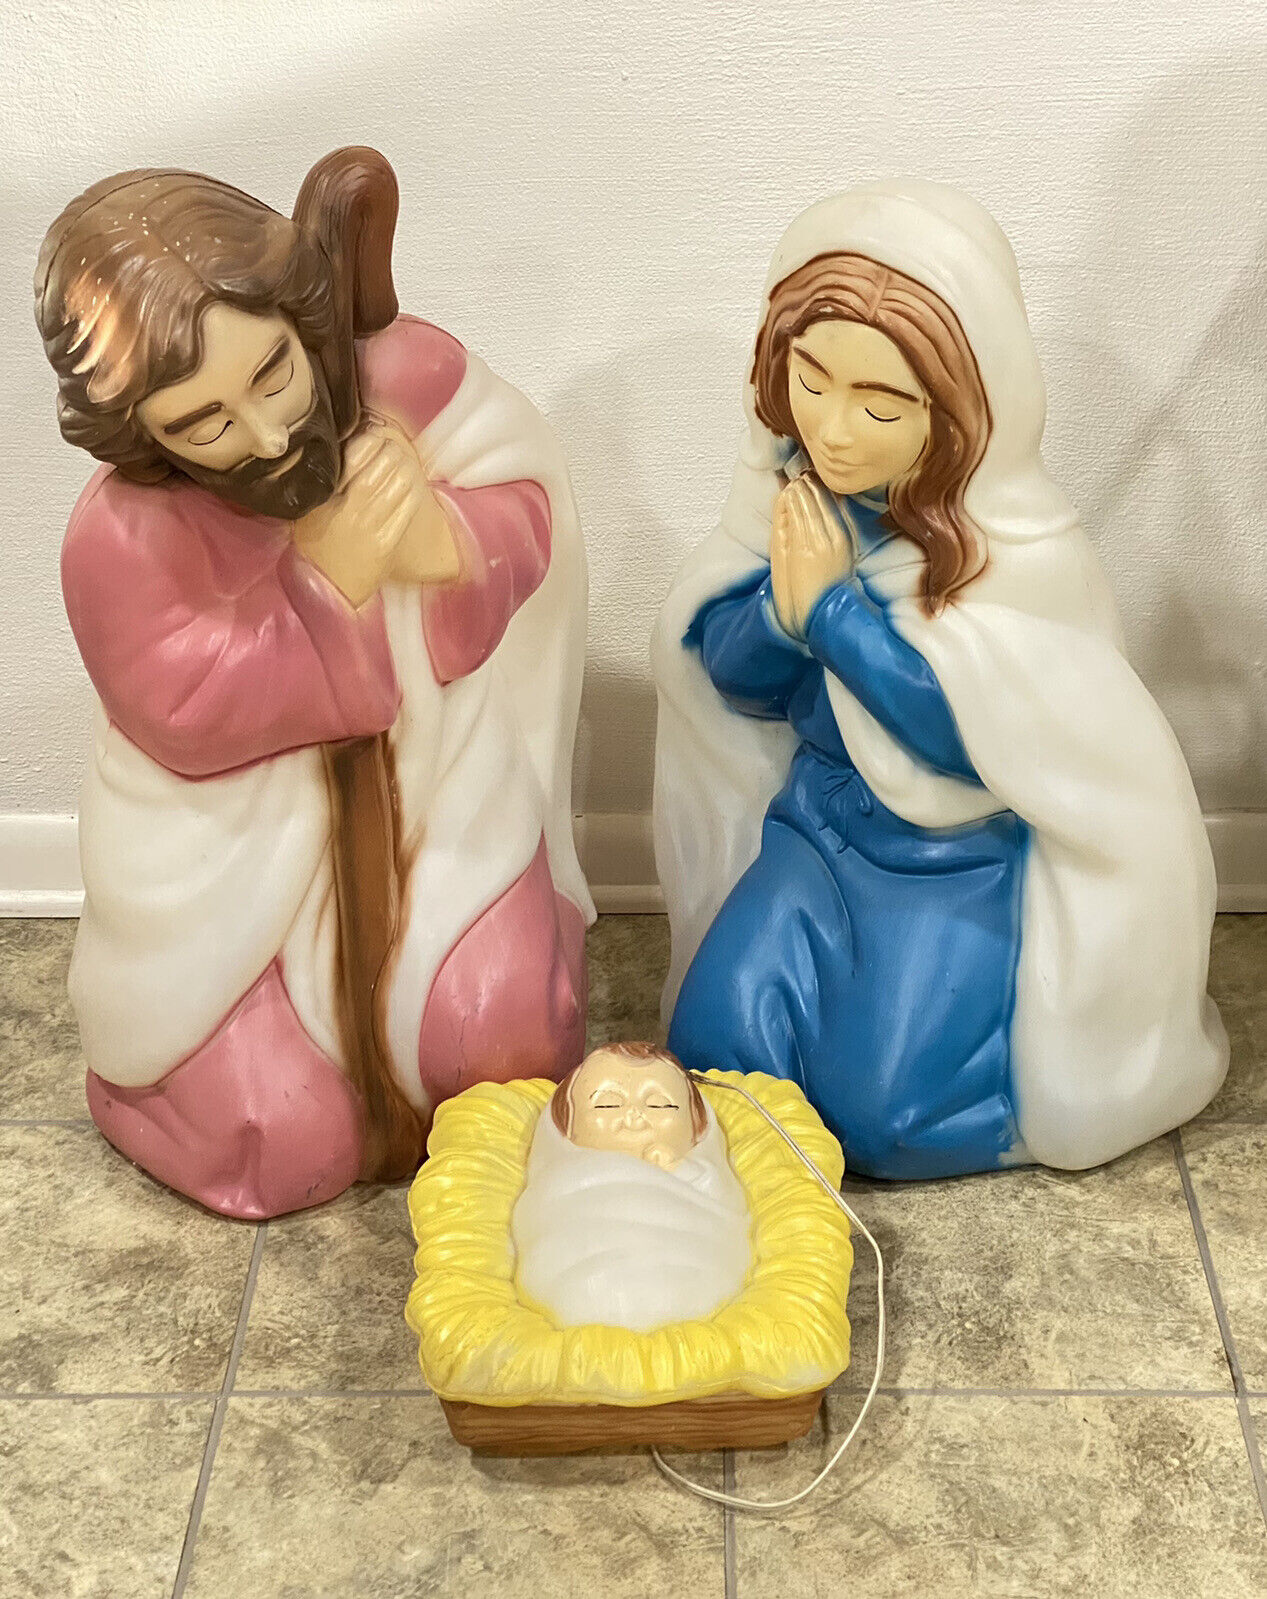 General Foam Mary Joseph Jesus Baby 3 Piece Blow Mold Nativity Set Vintage